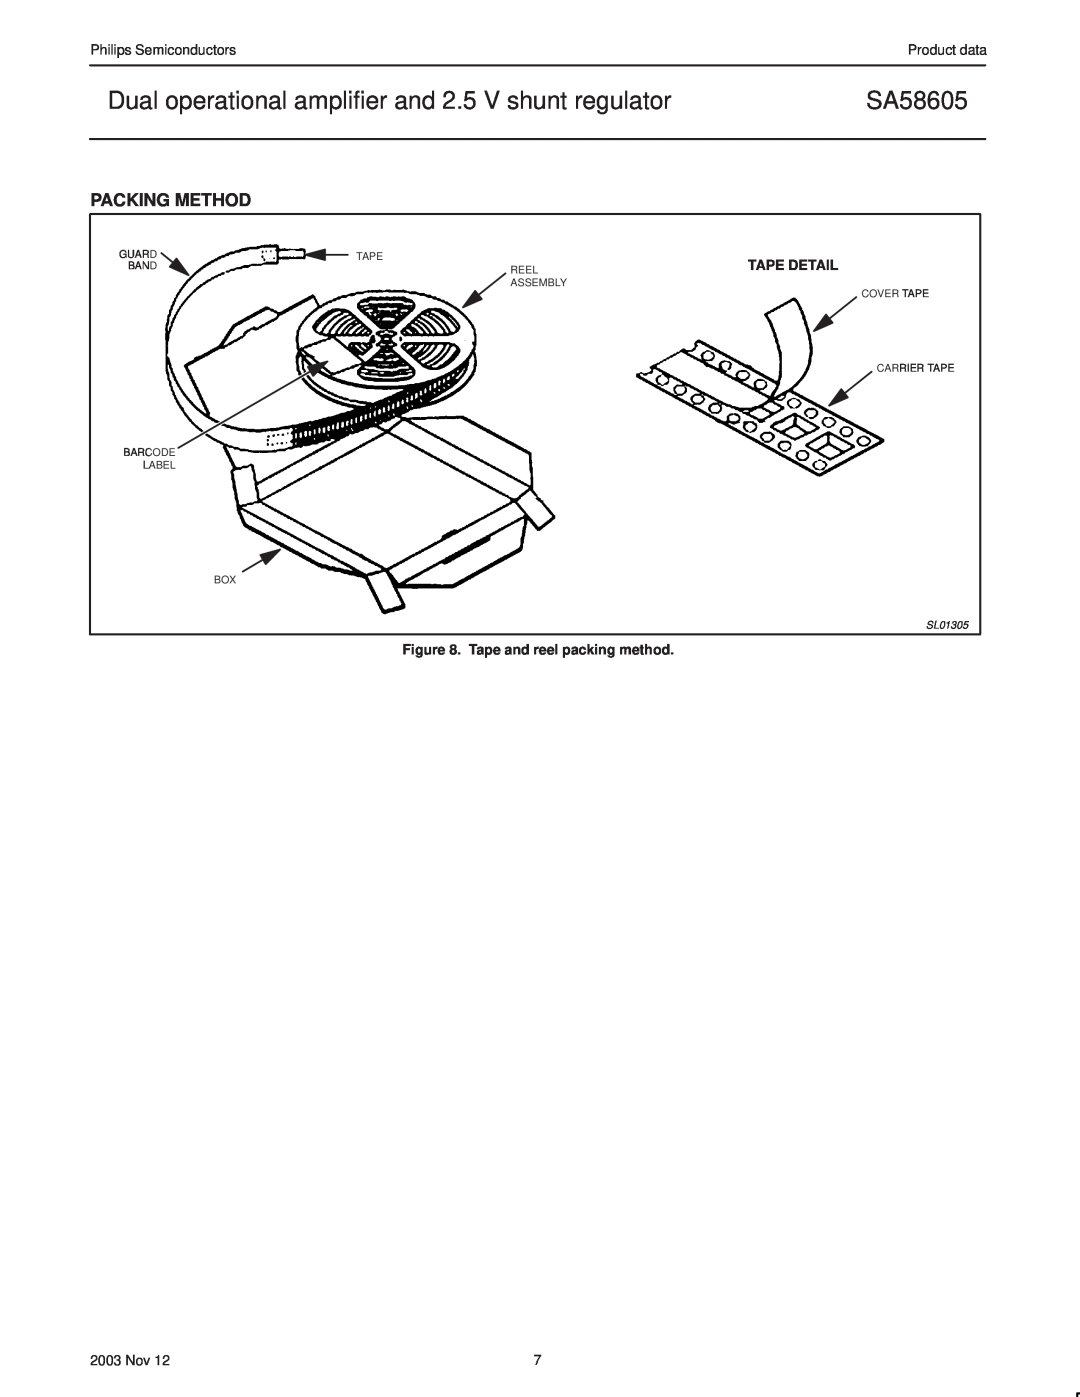 Philips SA58605 manual Packing Method, Product data, Tape Detail, SL01305 